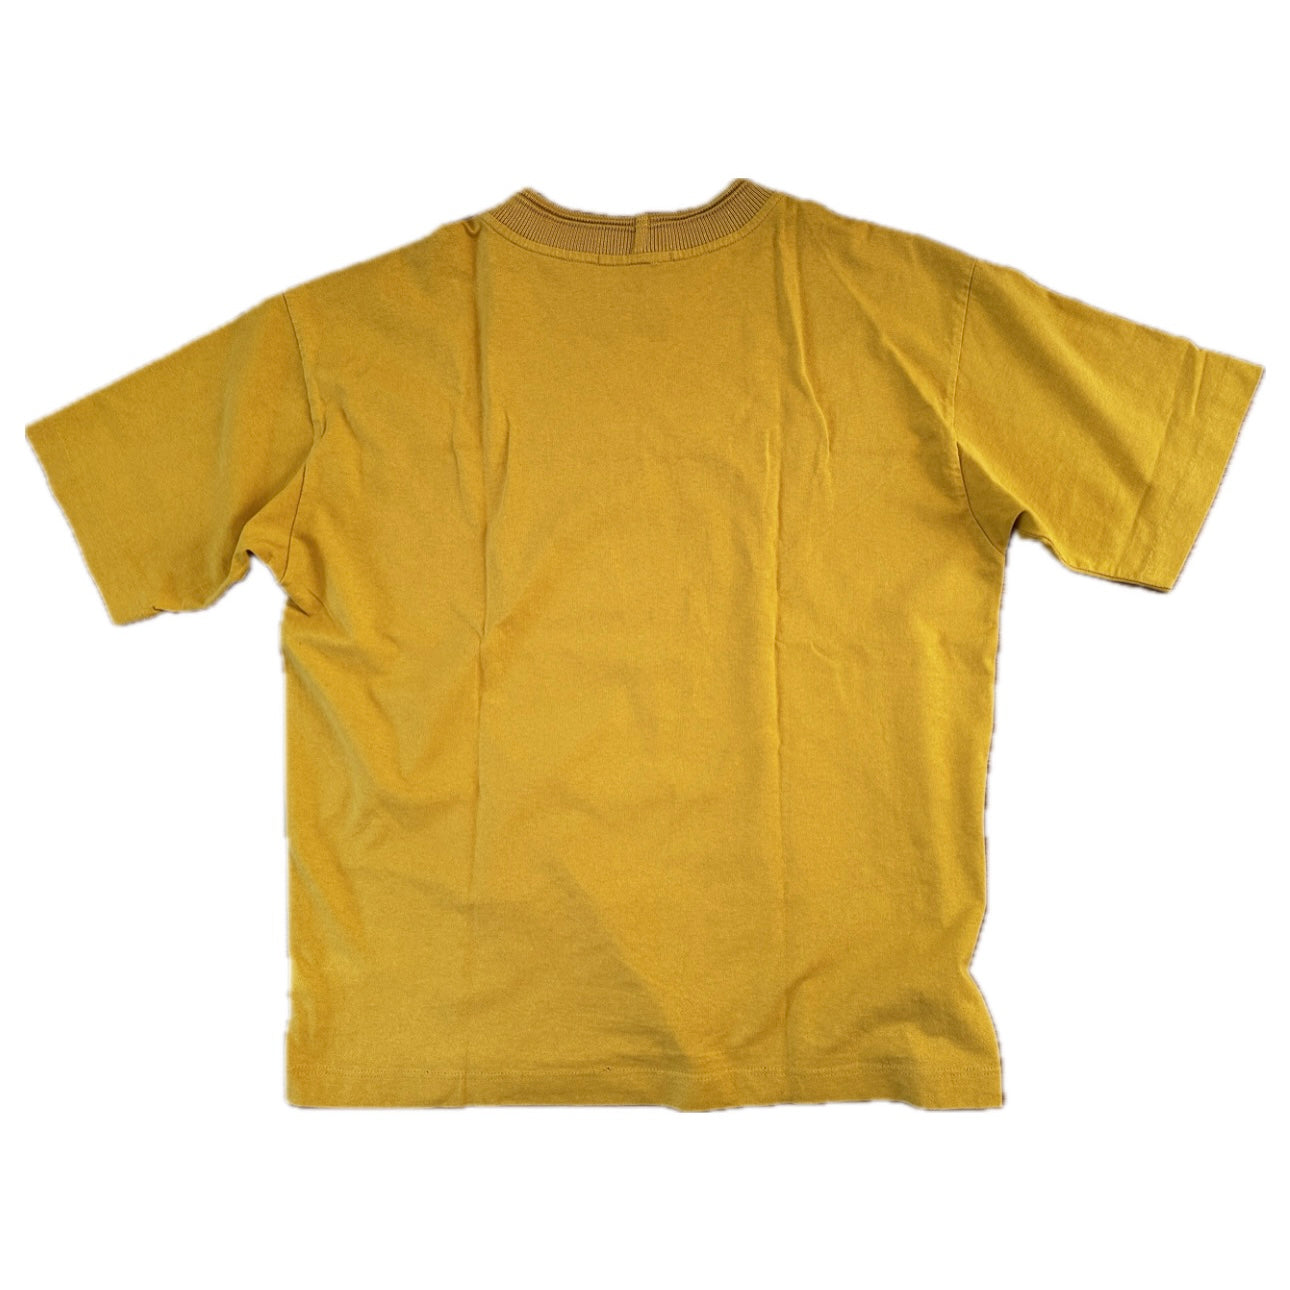 Stone Island 2018 Reflective Print Cotton Jersey T-Shirt - L